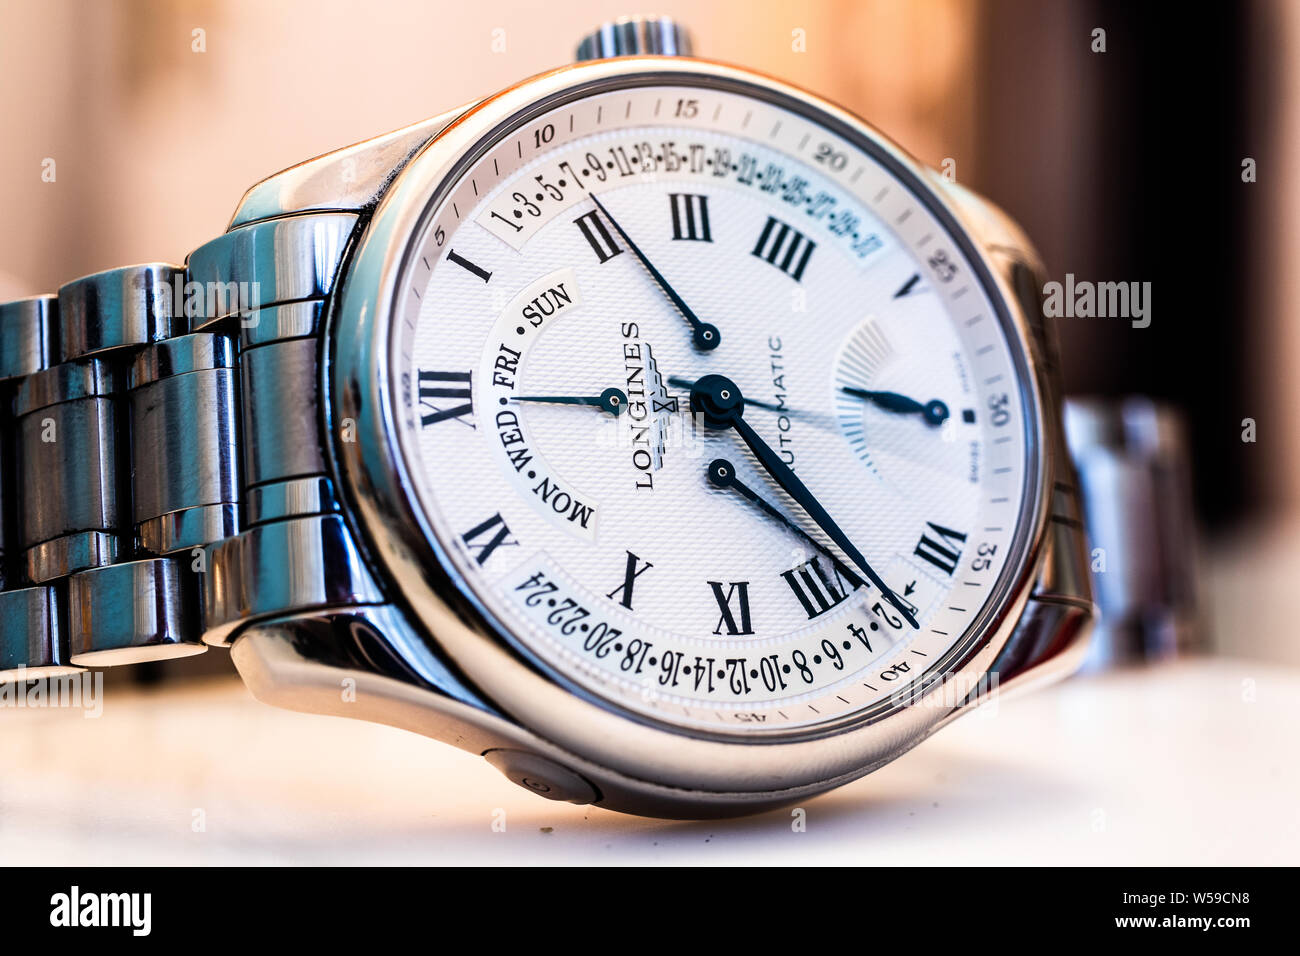 Lodz, Poland, Apr 2019 Longines hand watch, macro, luxury watch company, Longines winged hourglass logo registered 1889 is oldest unchanged trademark Stock Photo